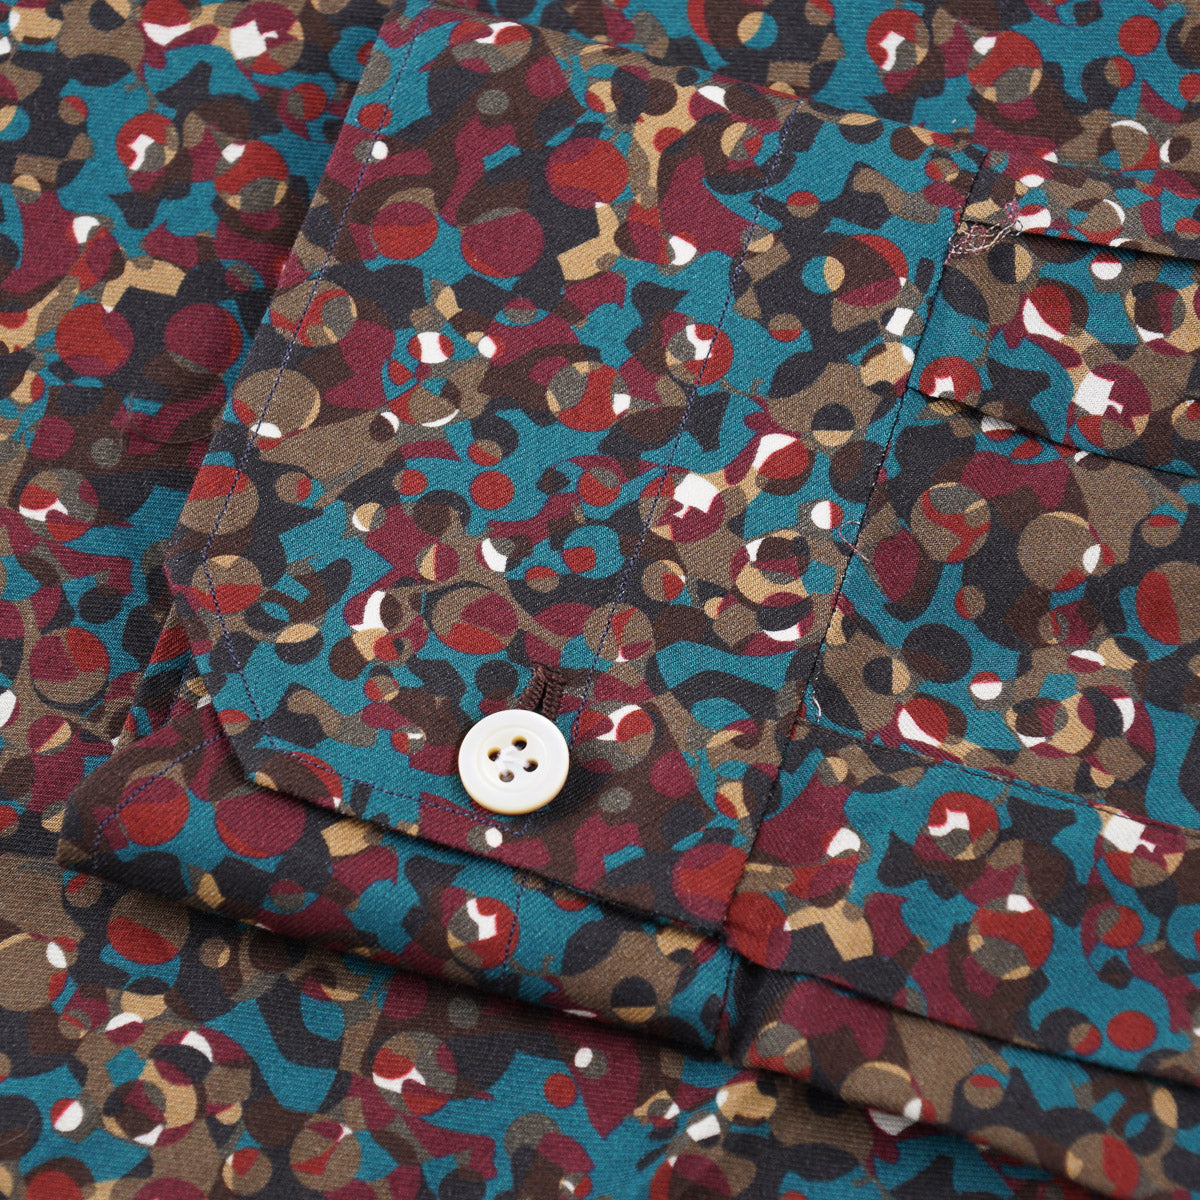 Kiton Multicolor Dot Print Shirt - Top Shelf Apparel